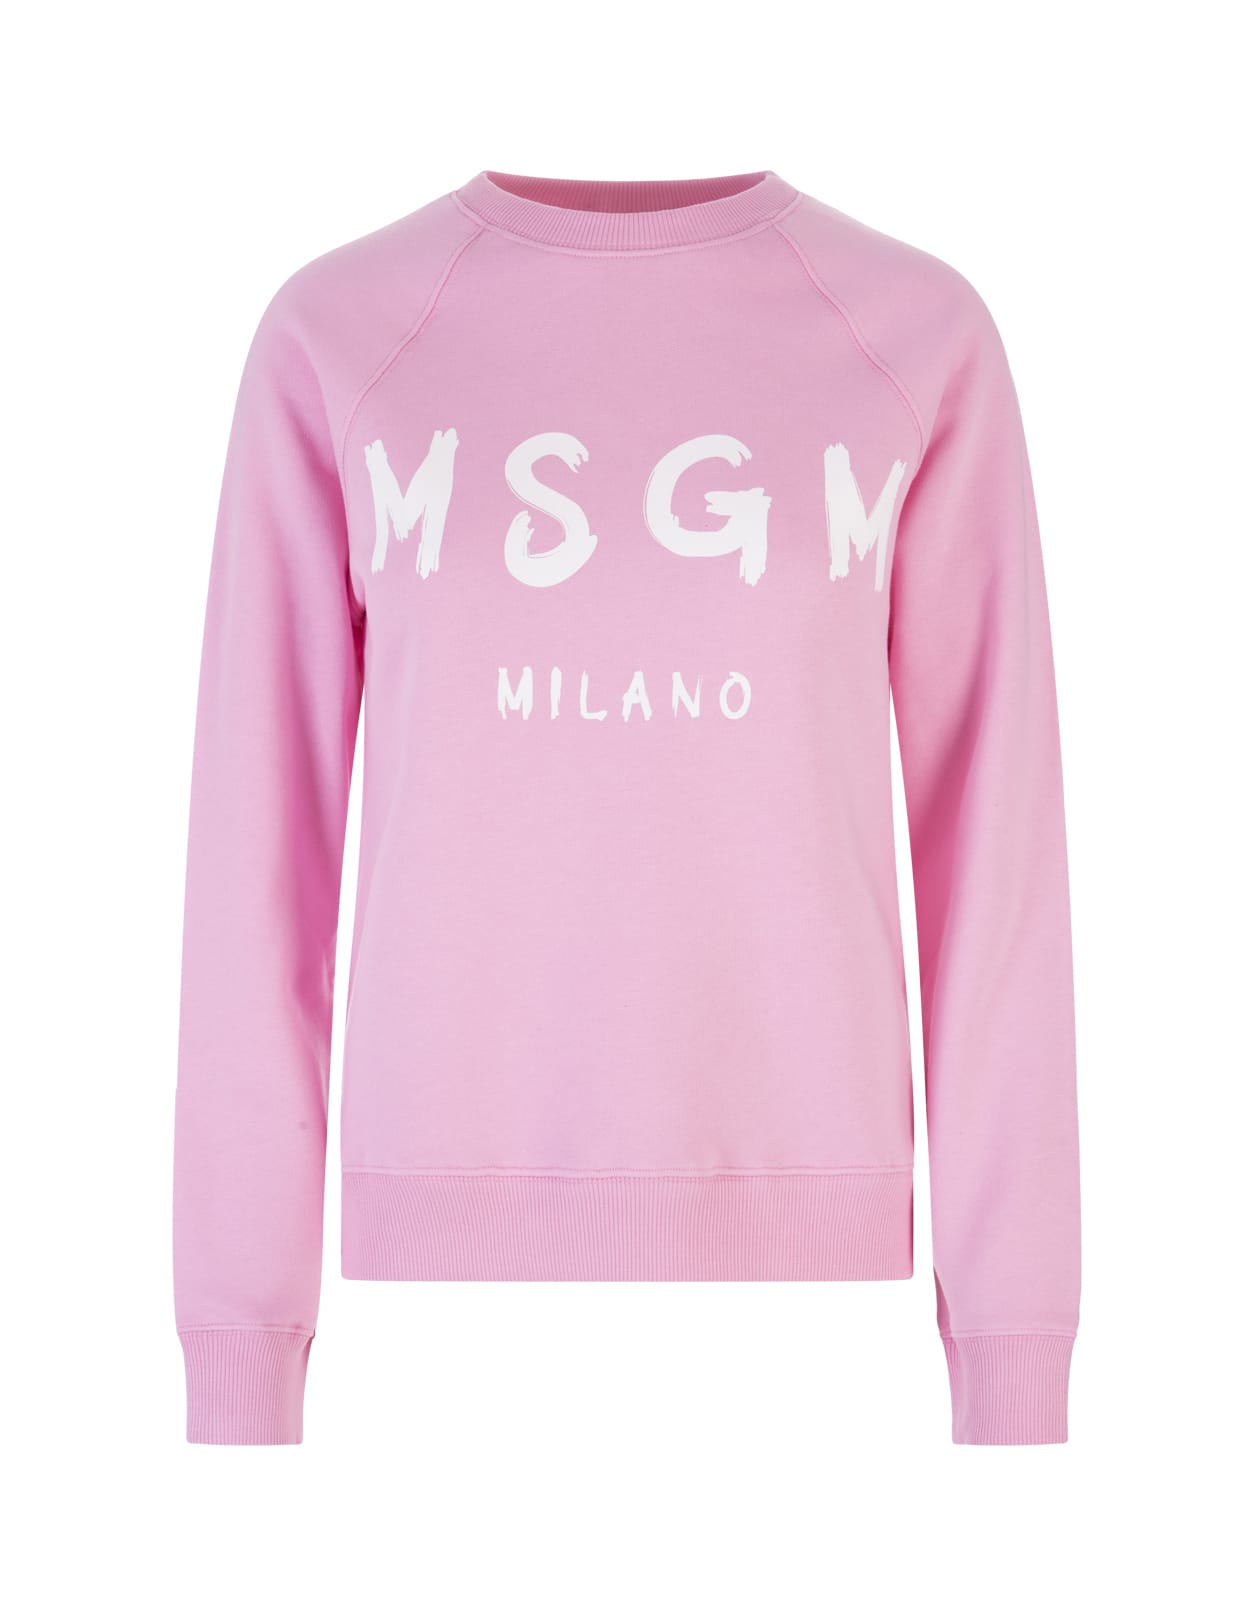 MSGM Woman Pink Sweatshirt With White Brushed Logo